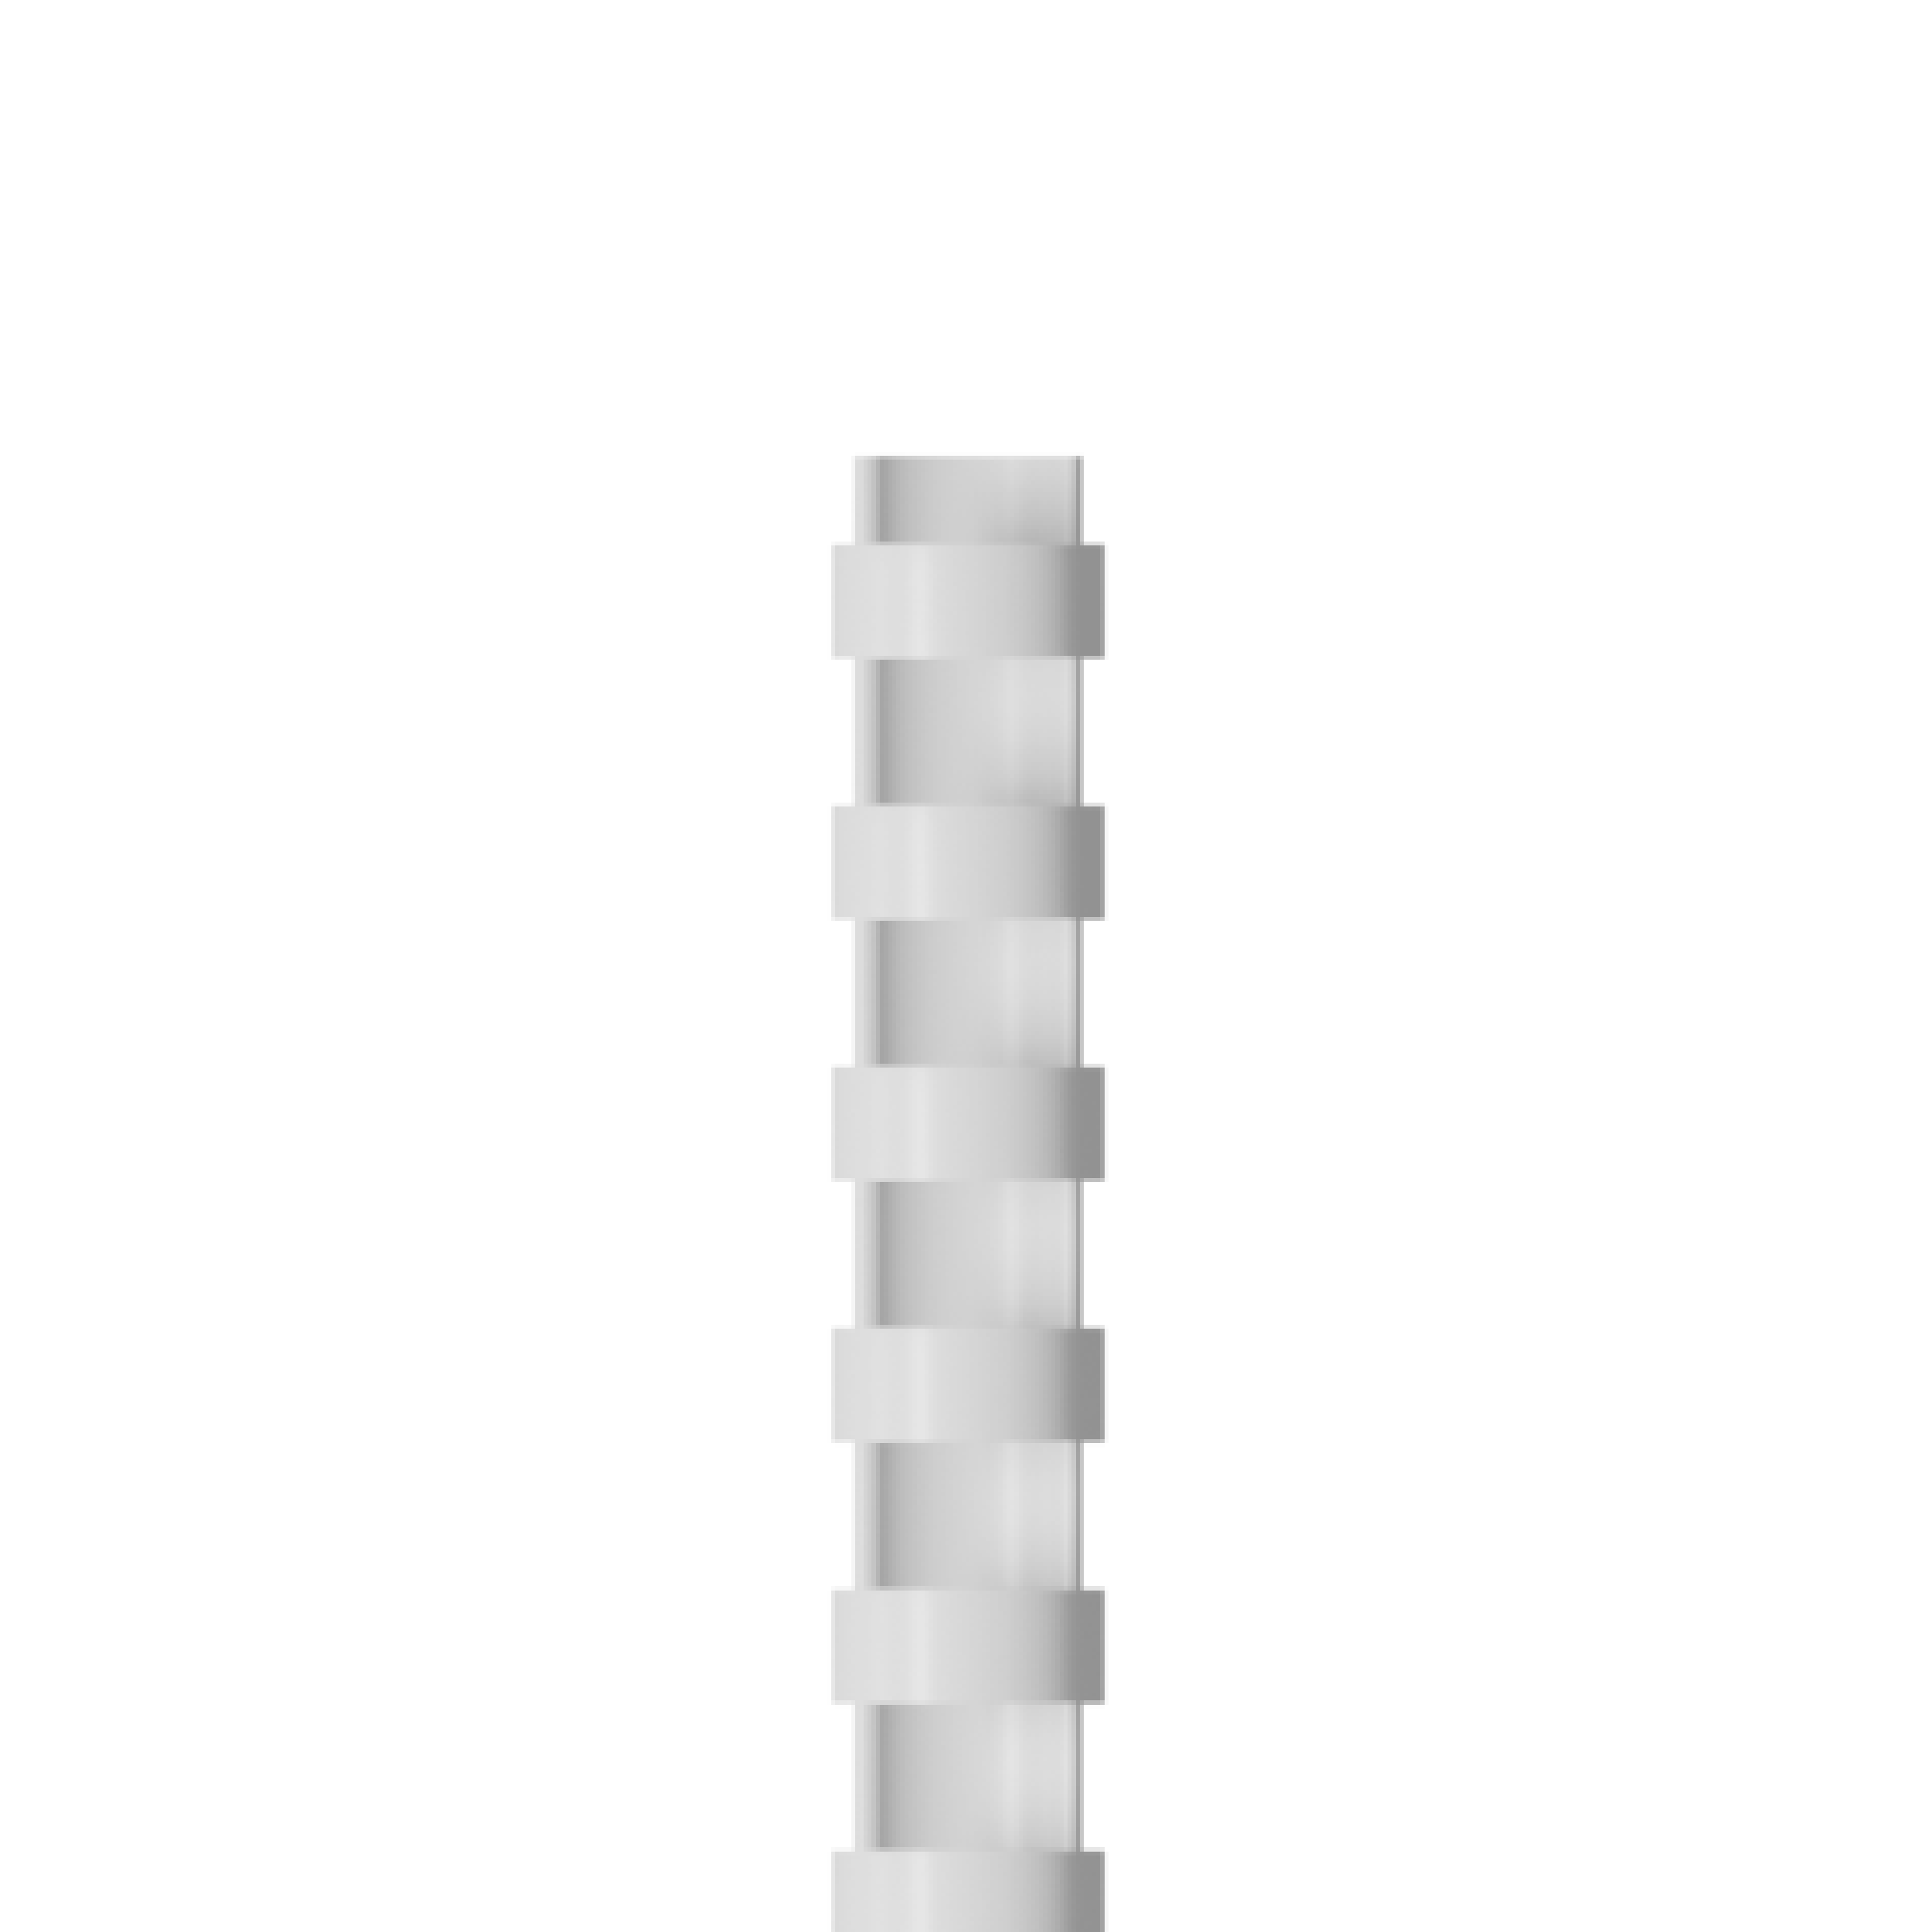 RAADO 14mm Plastic Spiral Binding Comb, White